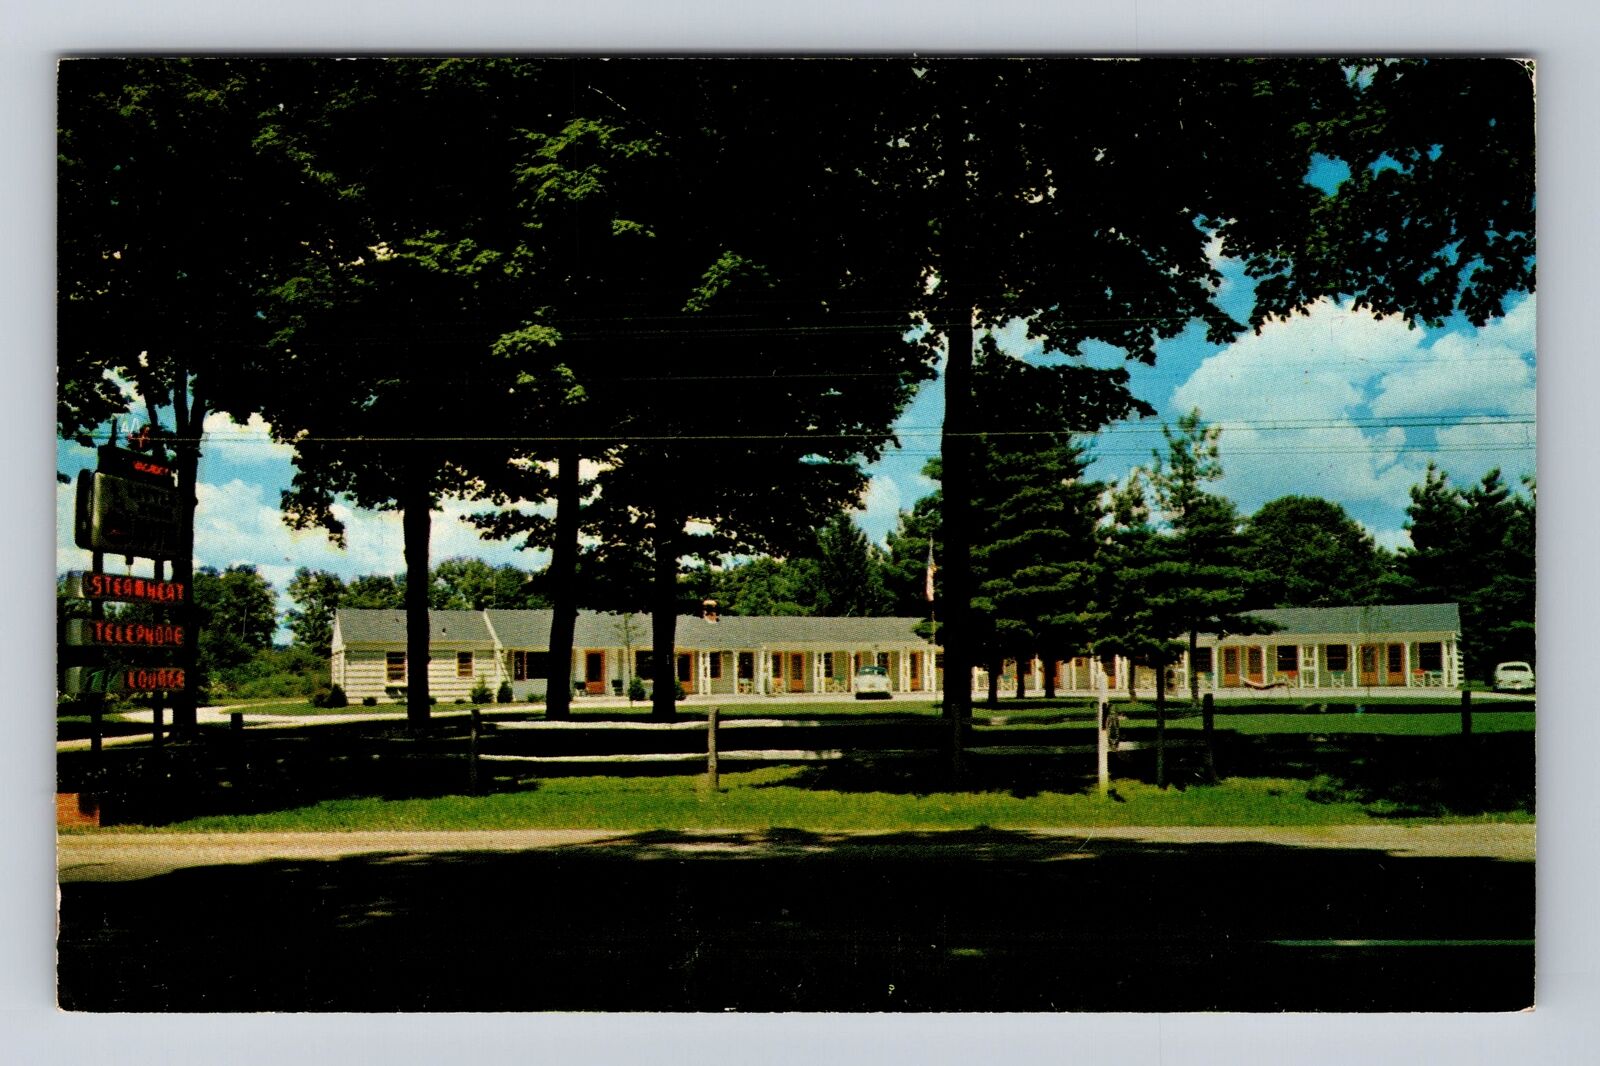 Coldwater MI-Michigan, Little King Motel, Advertising, Antique Vintage Postcard